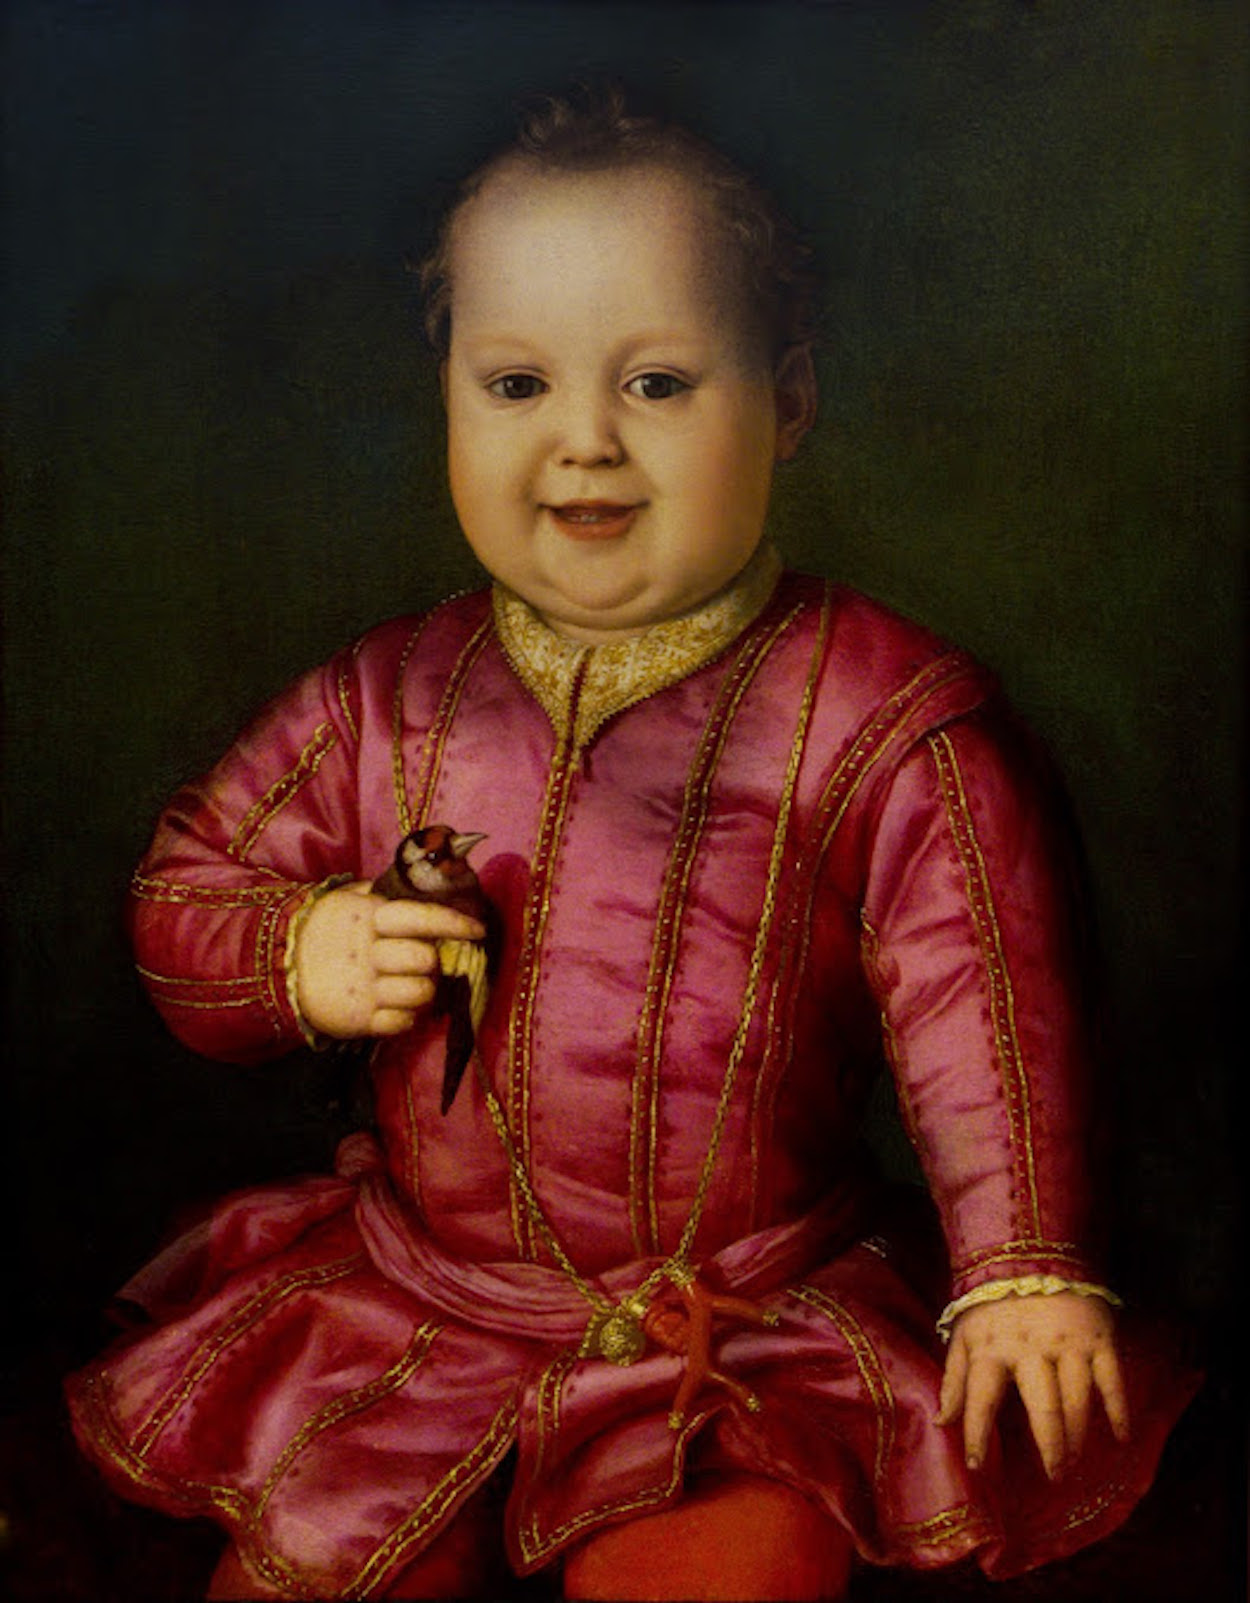 Juan de Médici de niño by Agnolo Bronzino - circa 1545 Galleria degli Uffizi